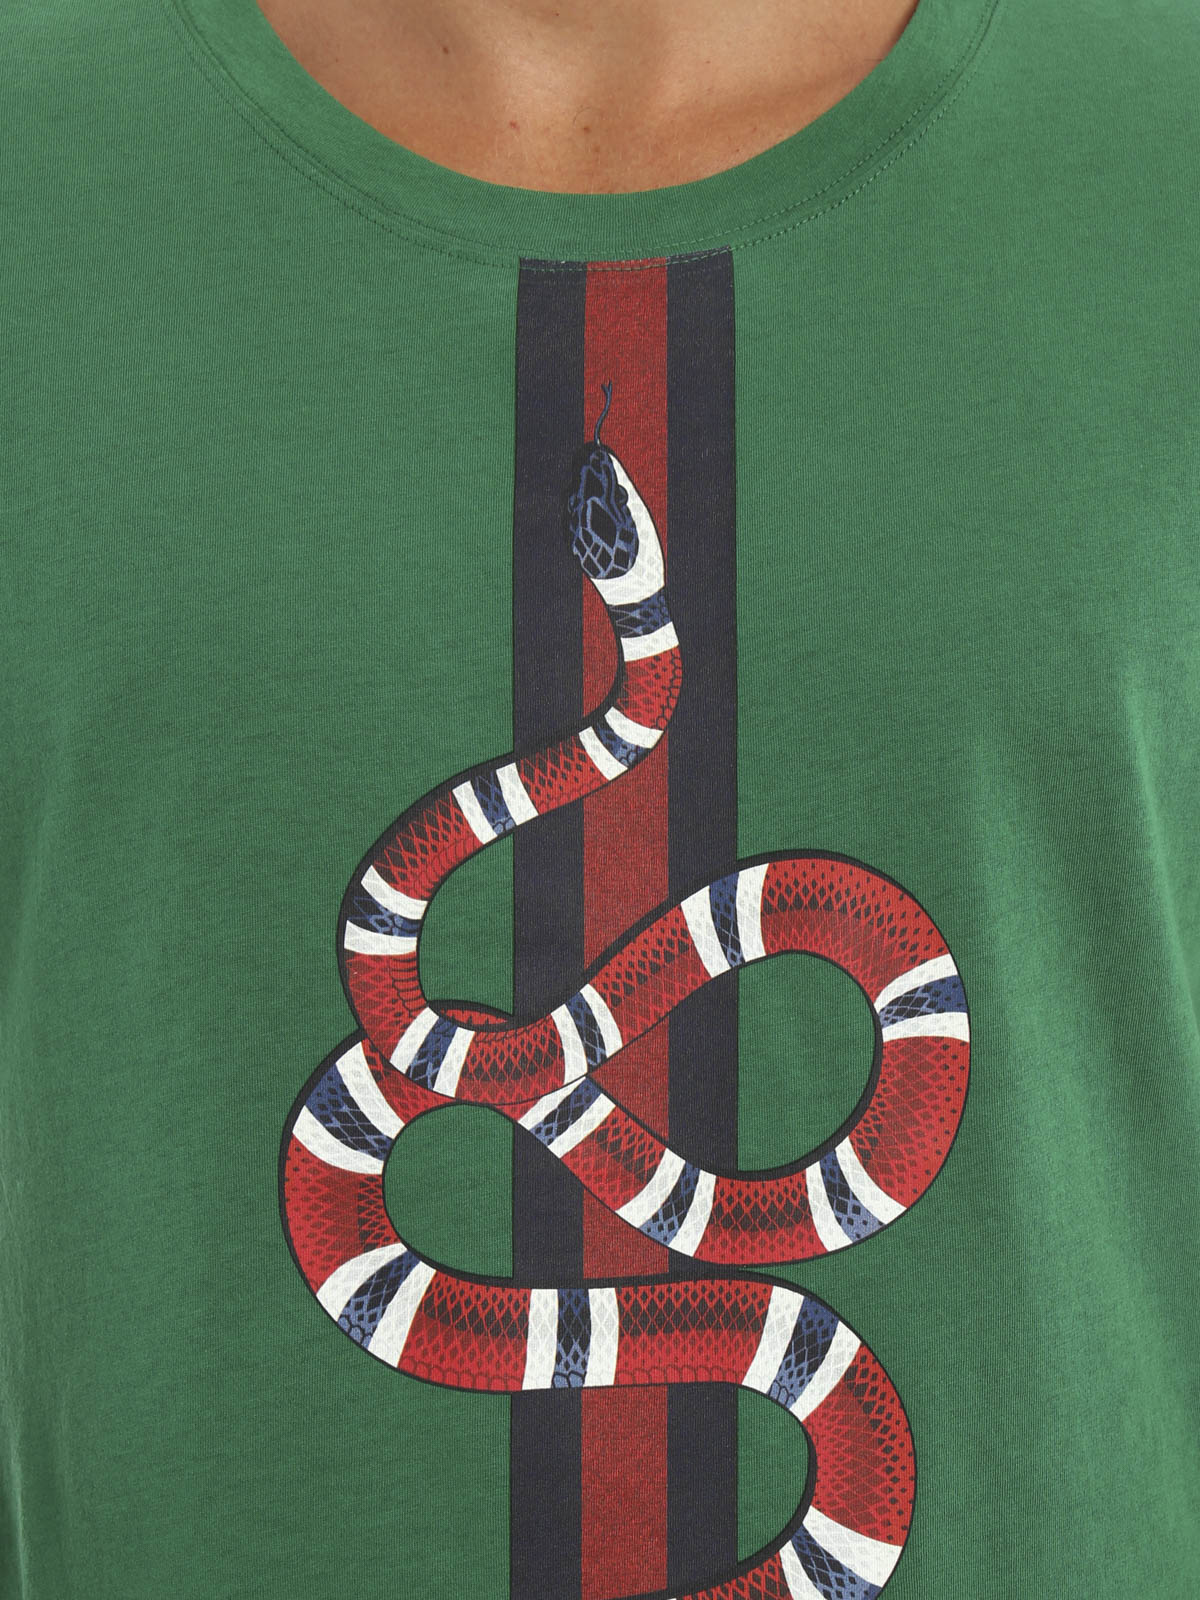 green gucci snake